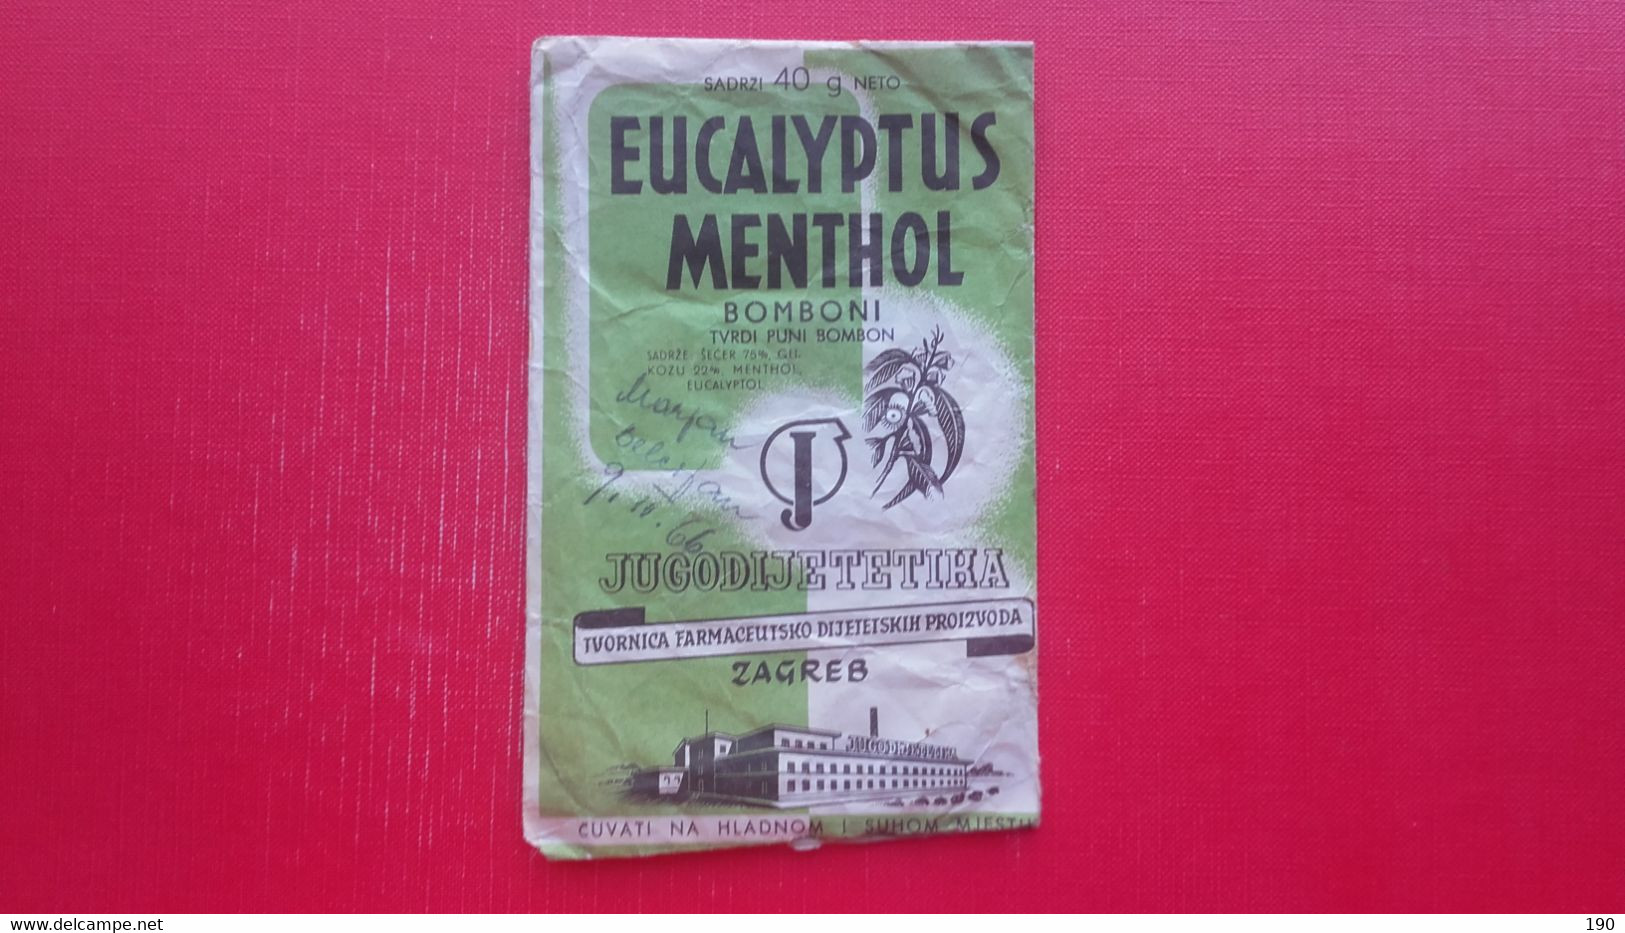 Paper Bag.Eucalyptus Menthol Bomboni.Jugodijetetika Zagreb - Material Und Zubehör